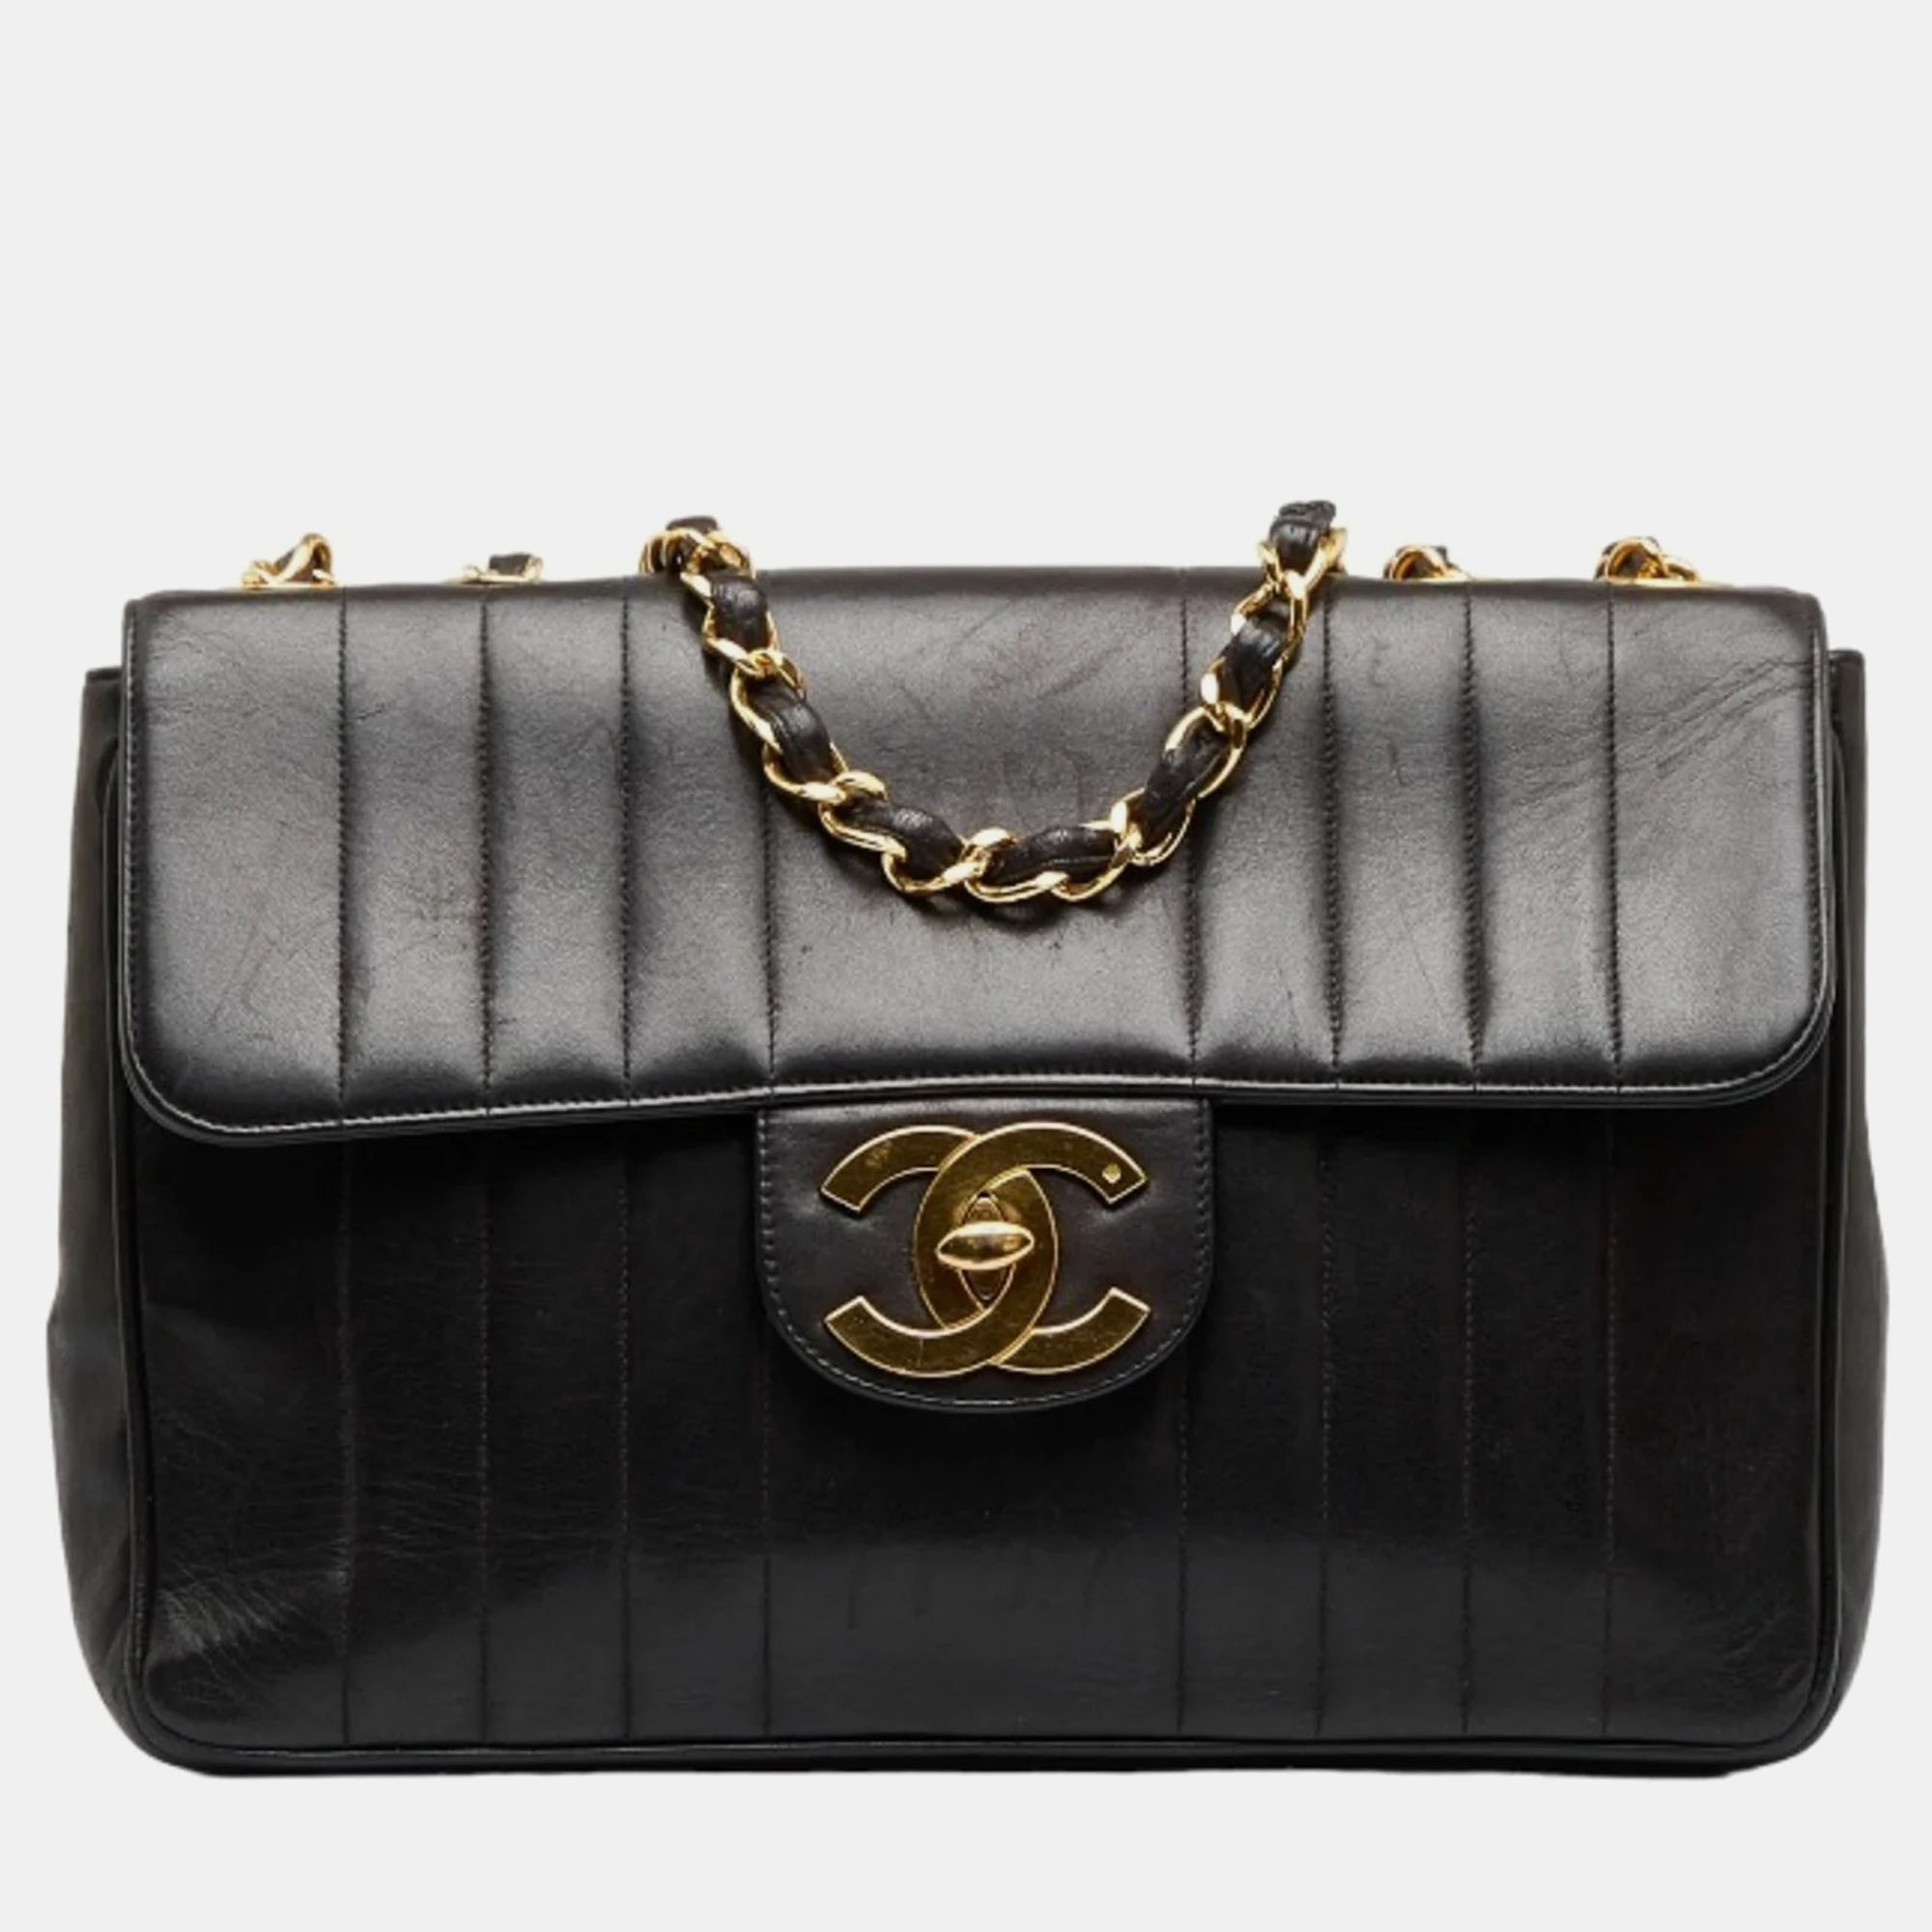 Chanel black vertical stitch lambskin leather jumbo single flap bag